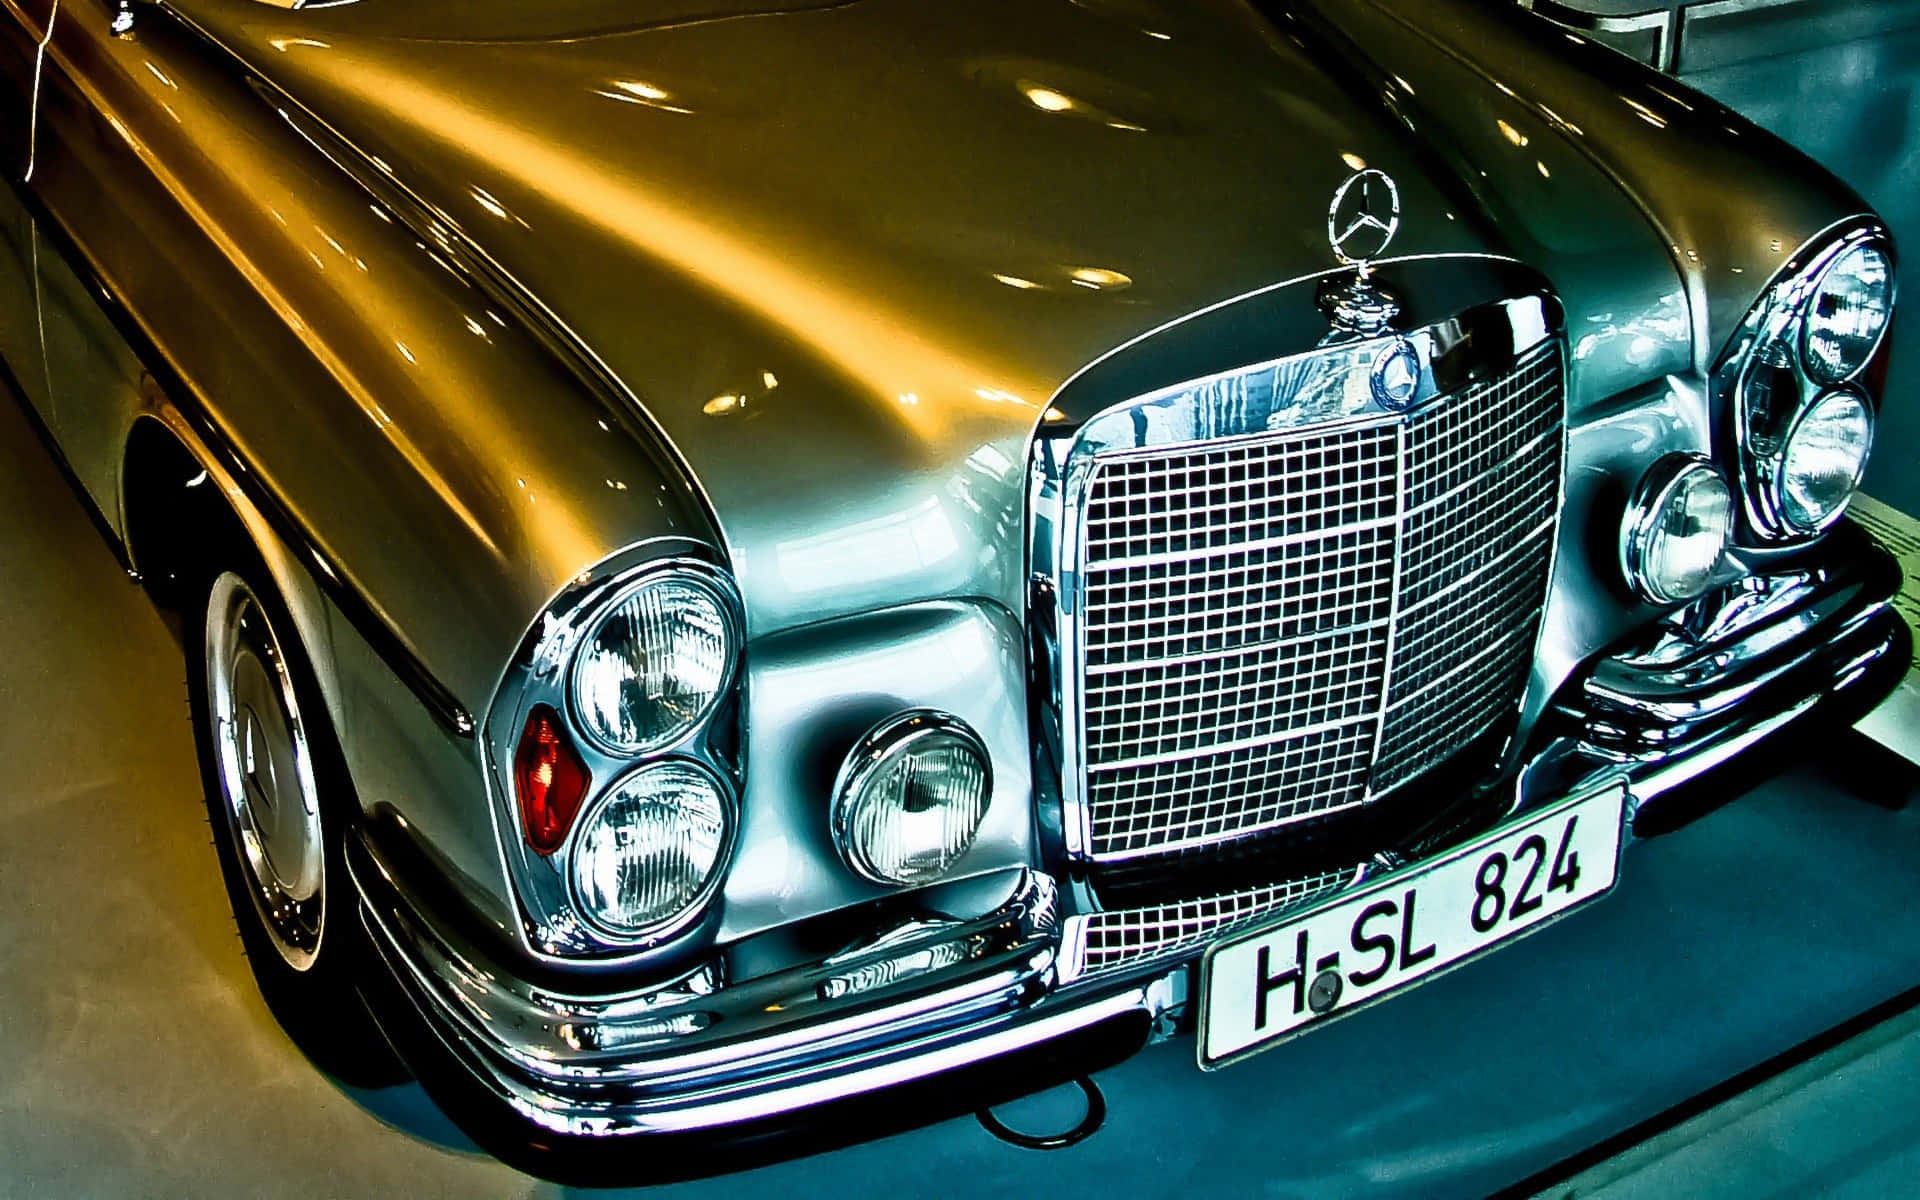 Caption: Timeless Elegance: An Old Mercedes Benz Car Wallpaper